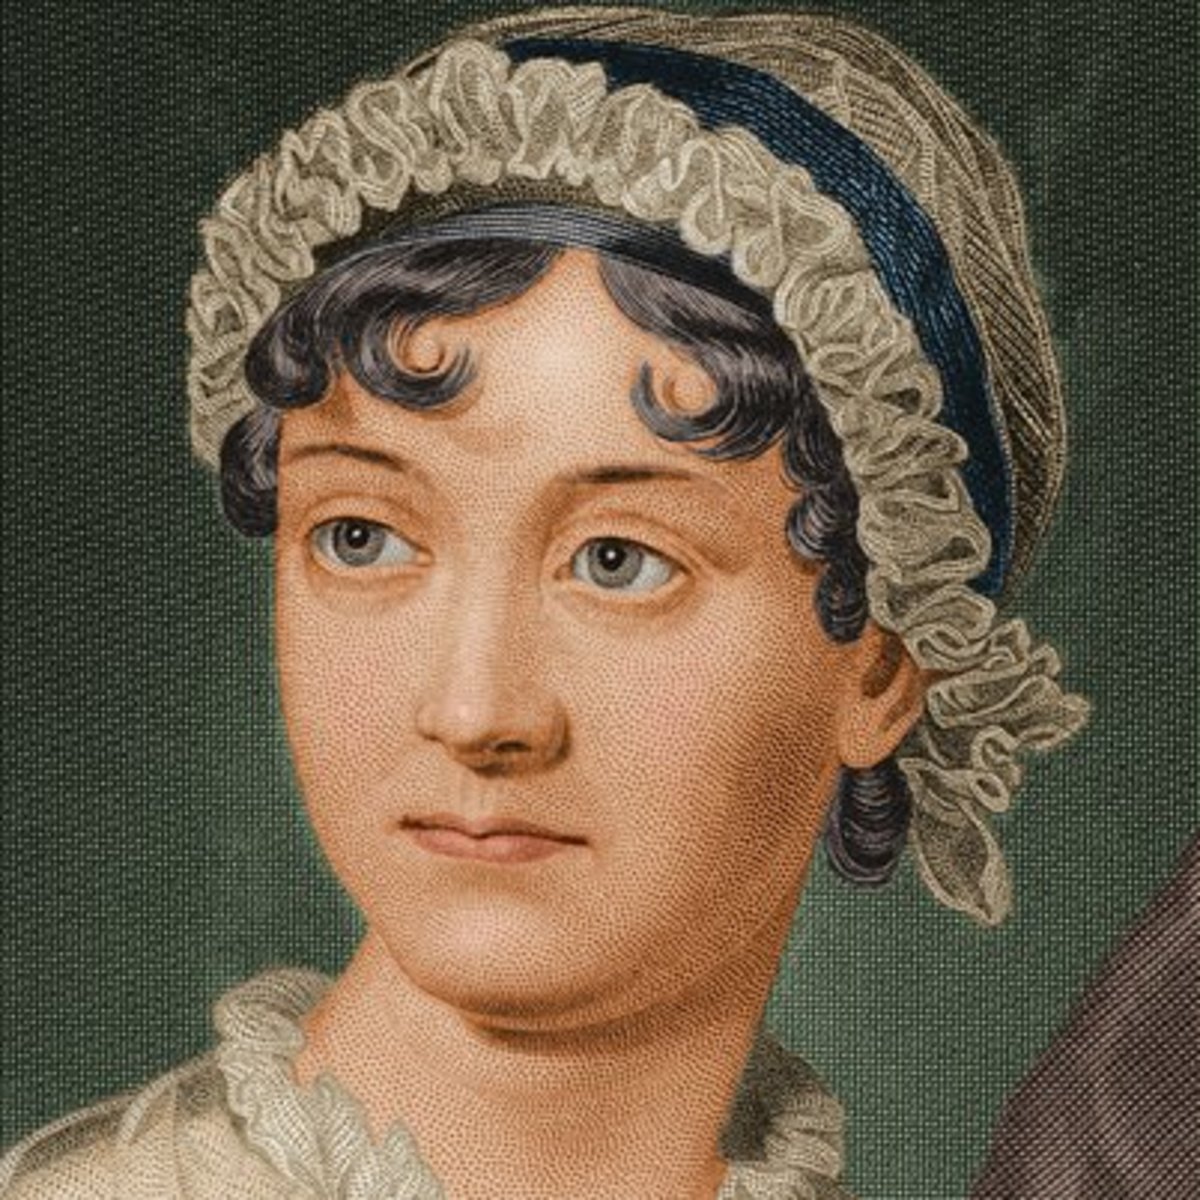 Jane Austen's 'Emma': How Austen Writes an Independent Woman